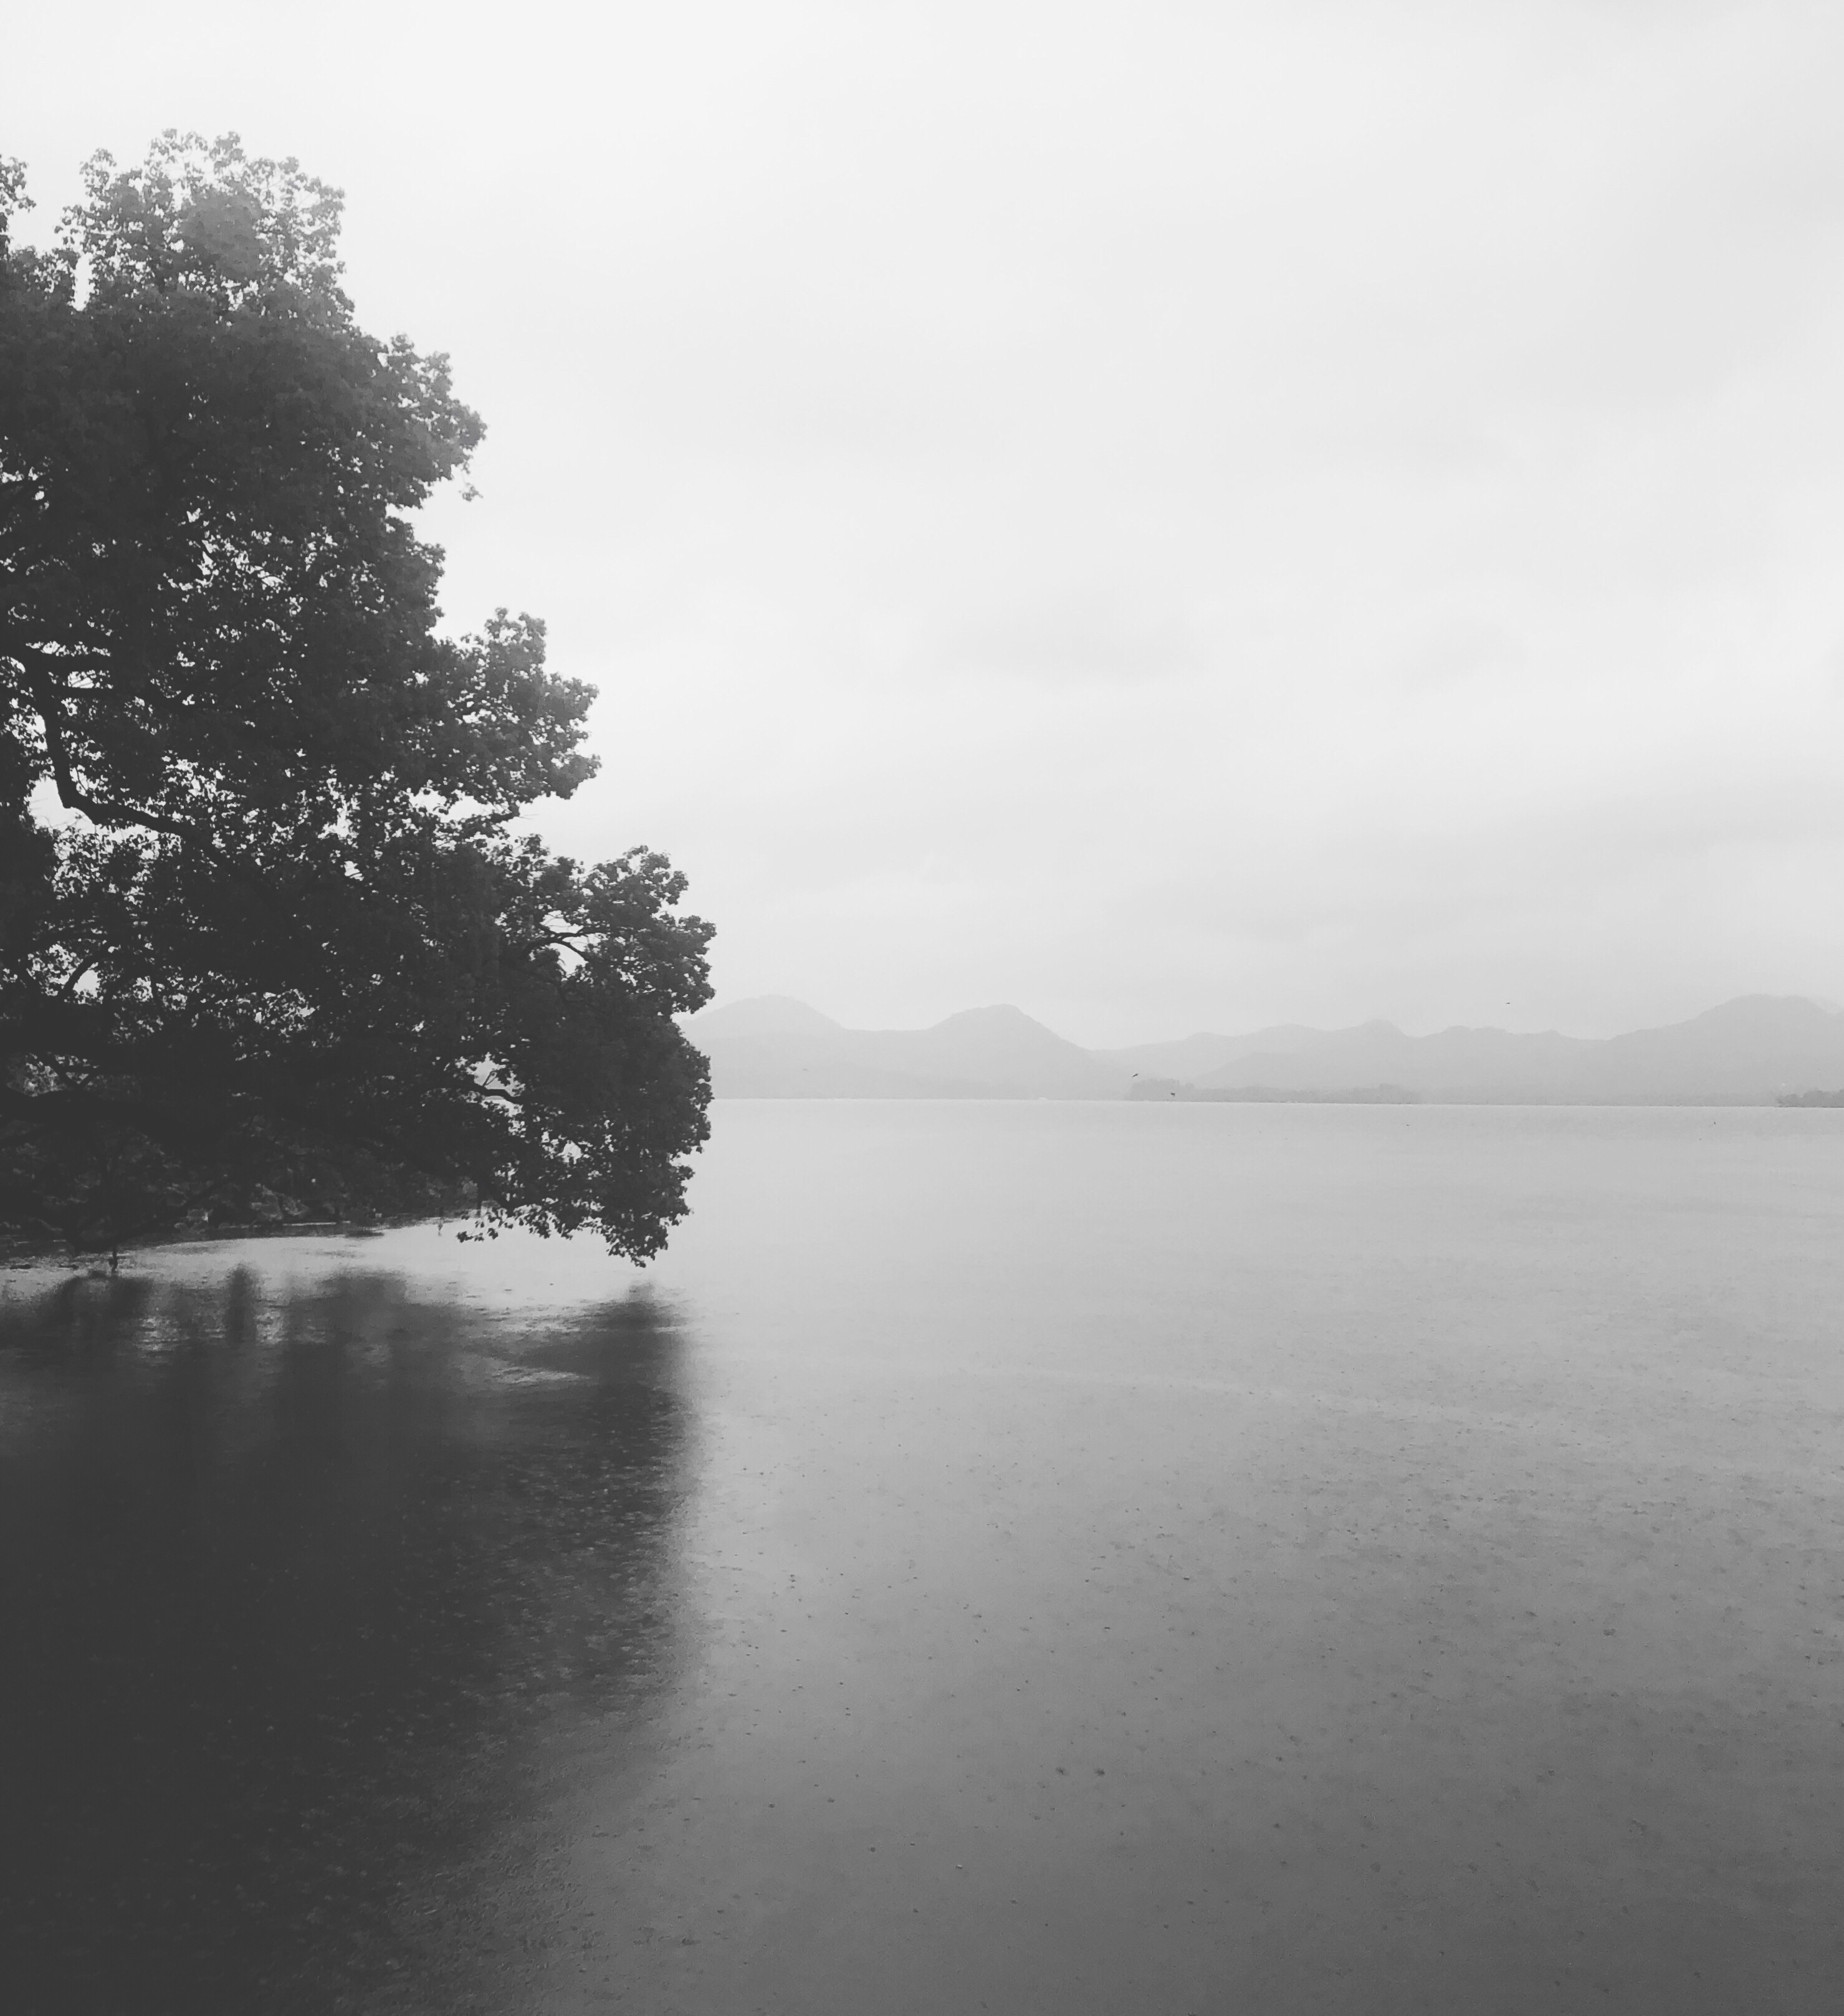 West Lake, Rain | 2019.08 at West Lake, Hangzhou, China